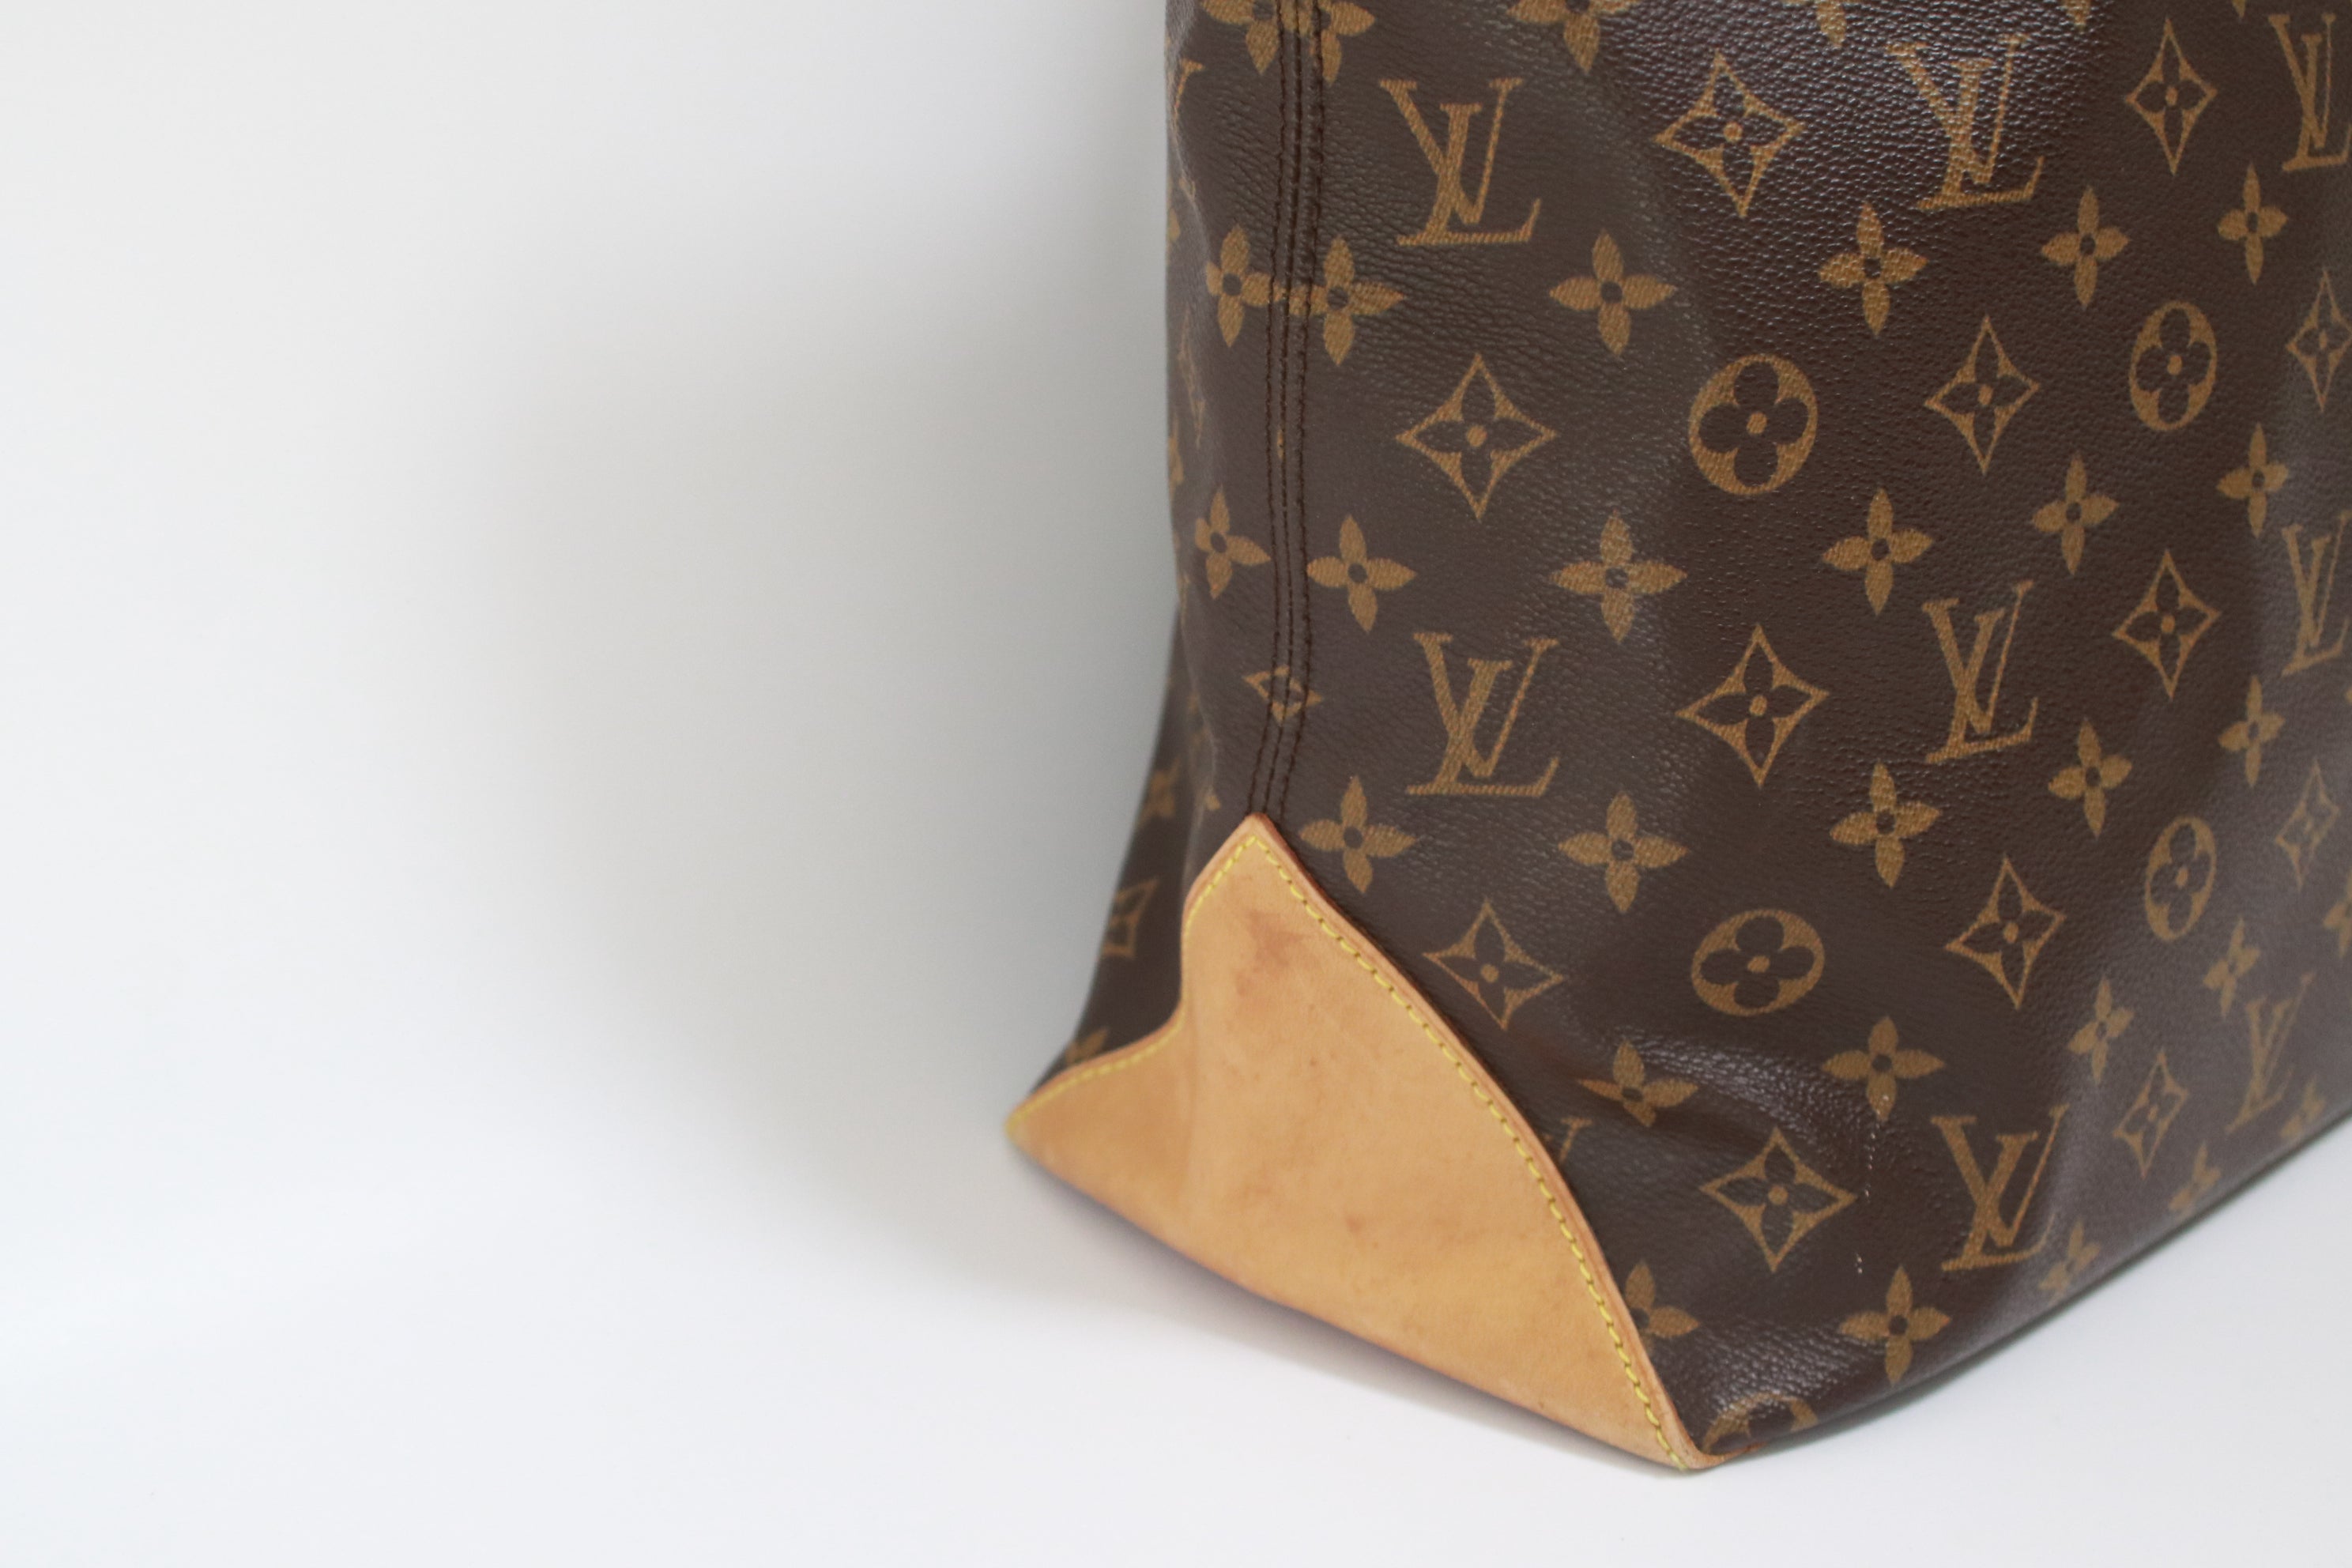 Louis Vuitton Cabas Mezzo Shoulder Tote Bag Used (7068)